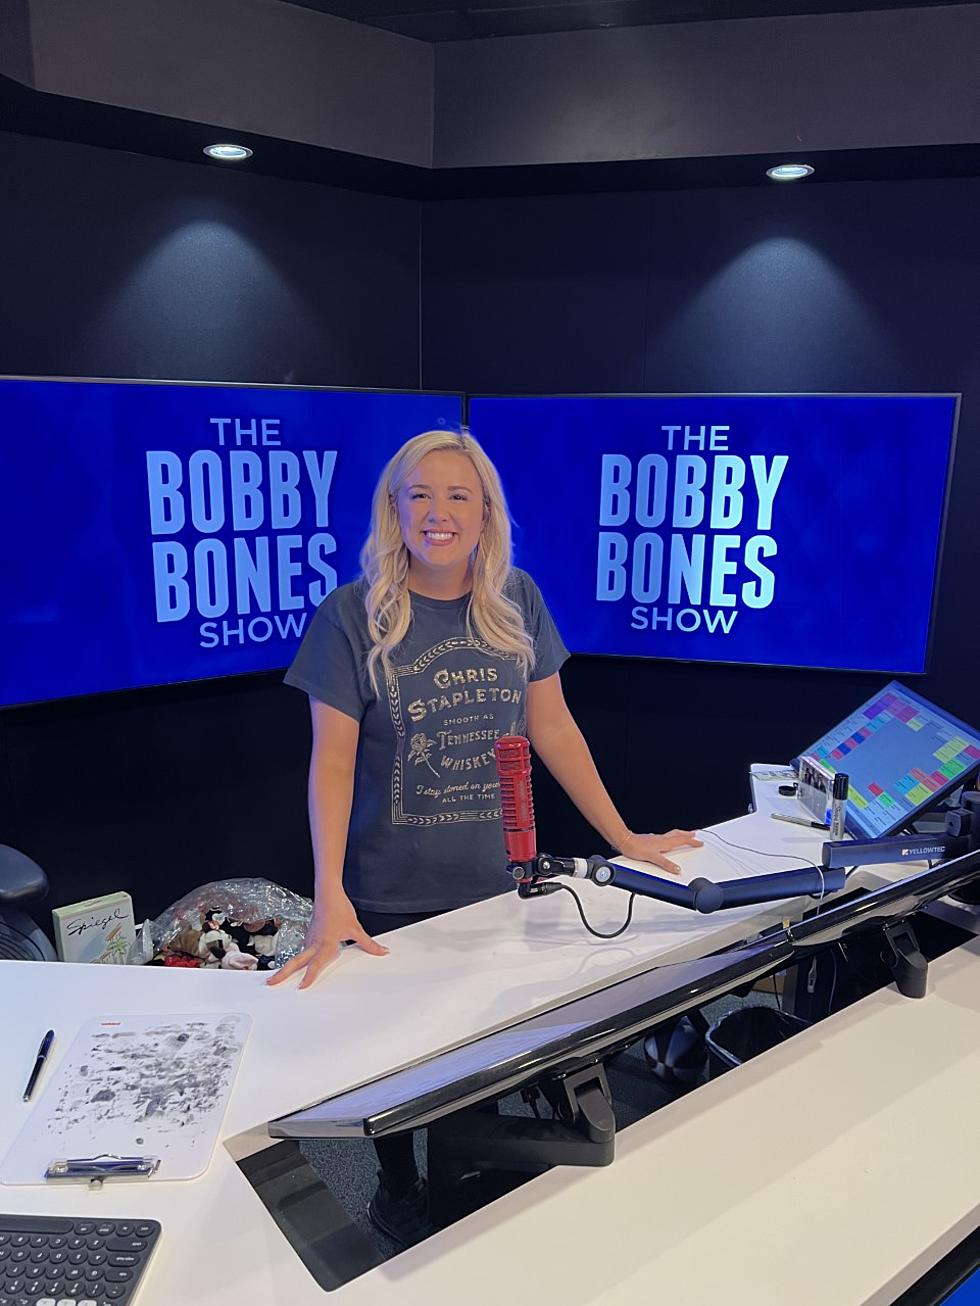 WOAH Why Did A Local Lubbock Radio DJ Visit The Bobby Bones Show?